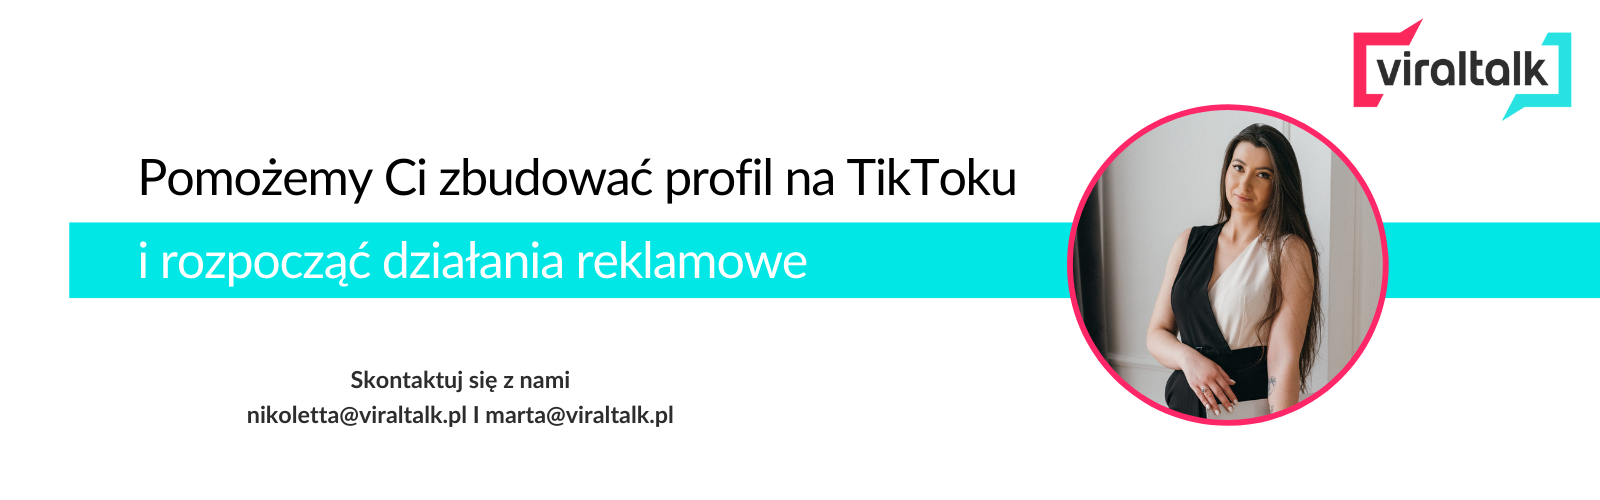 Reklama na TikToku. Wprwadzenie BLOG Viral Talk